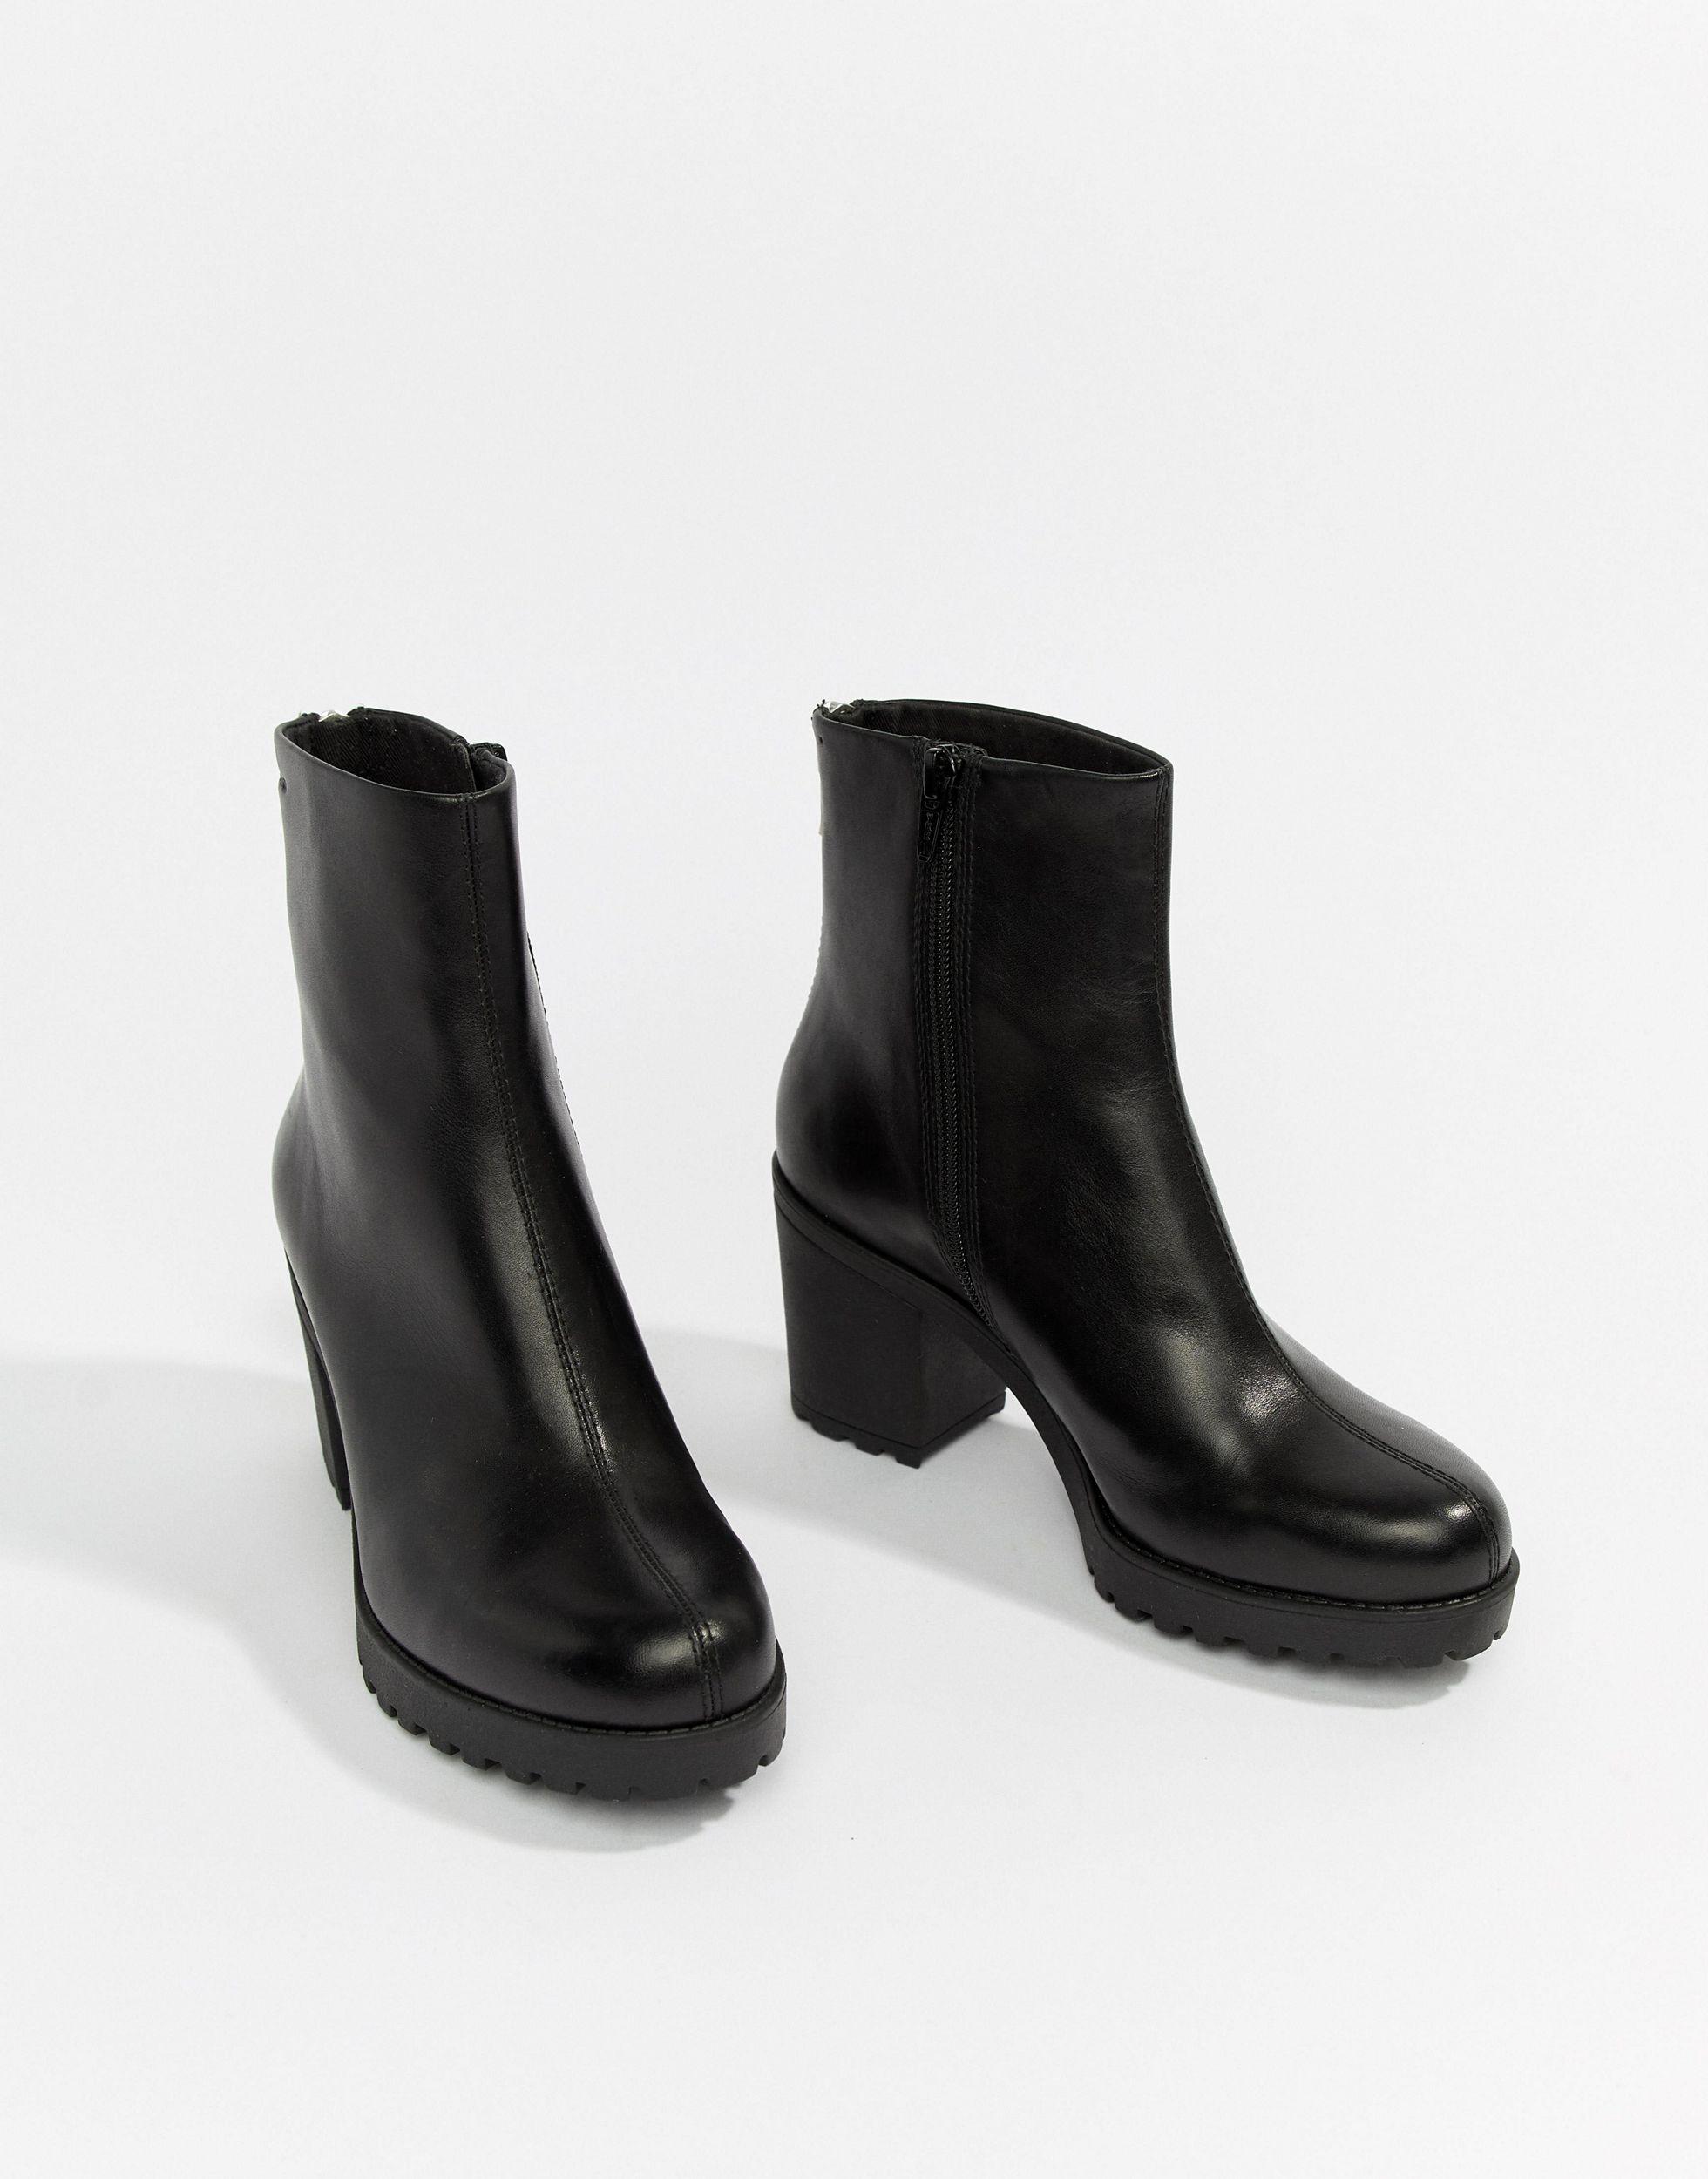 Vagabond Grace Black Leather Ankle Boots | vlr.eng.br